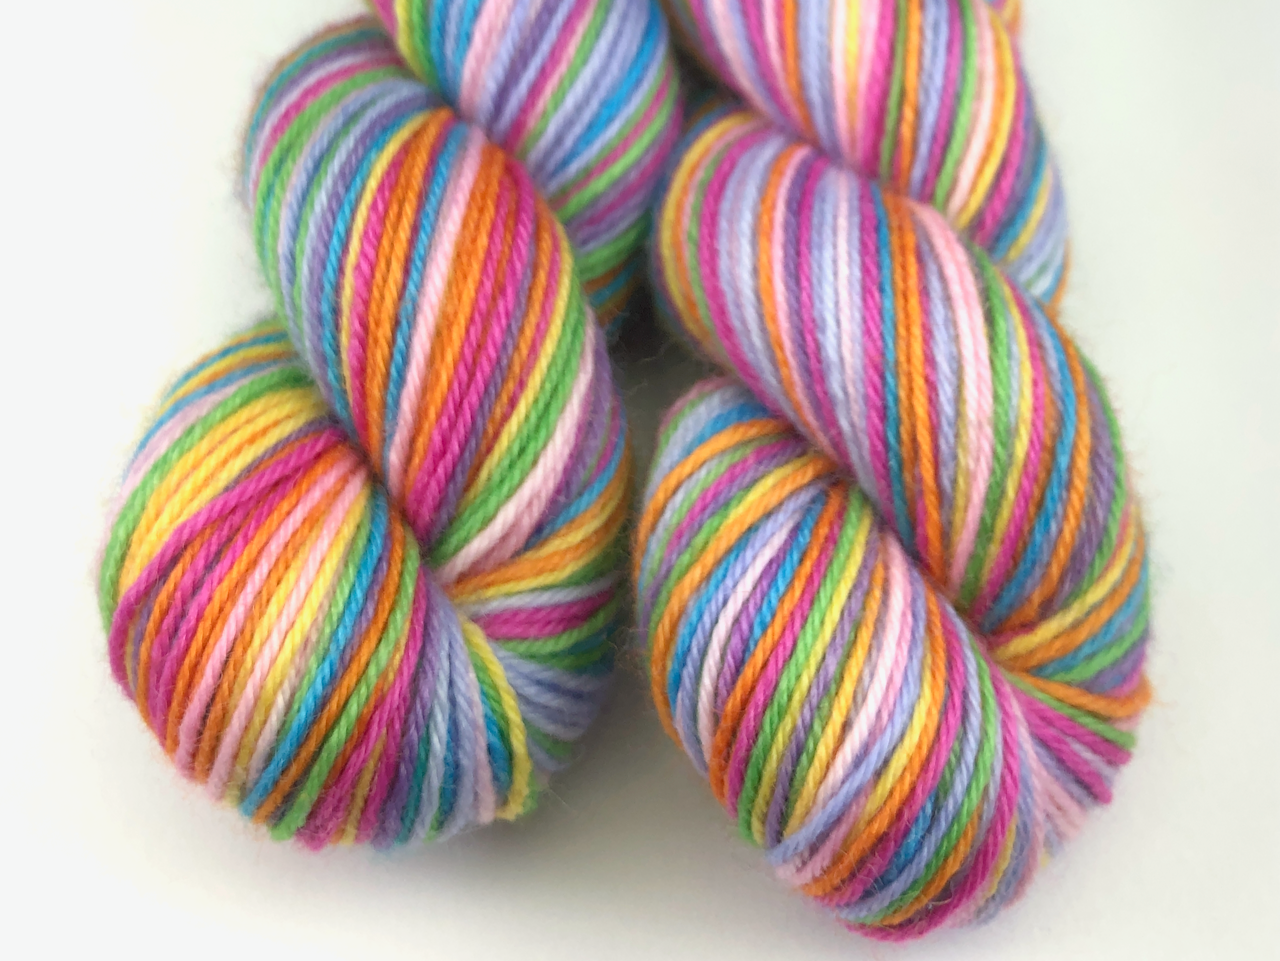 Lady Amalthea self-striping sock yarn